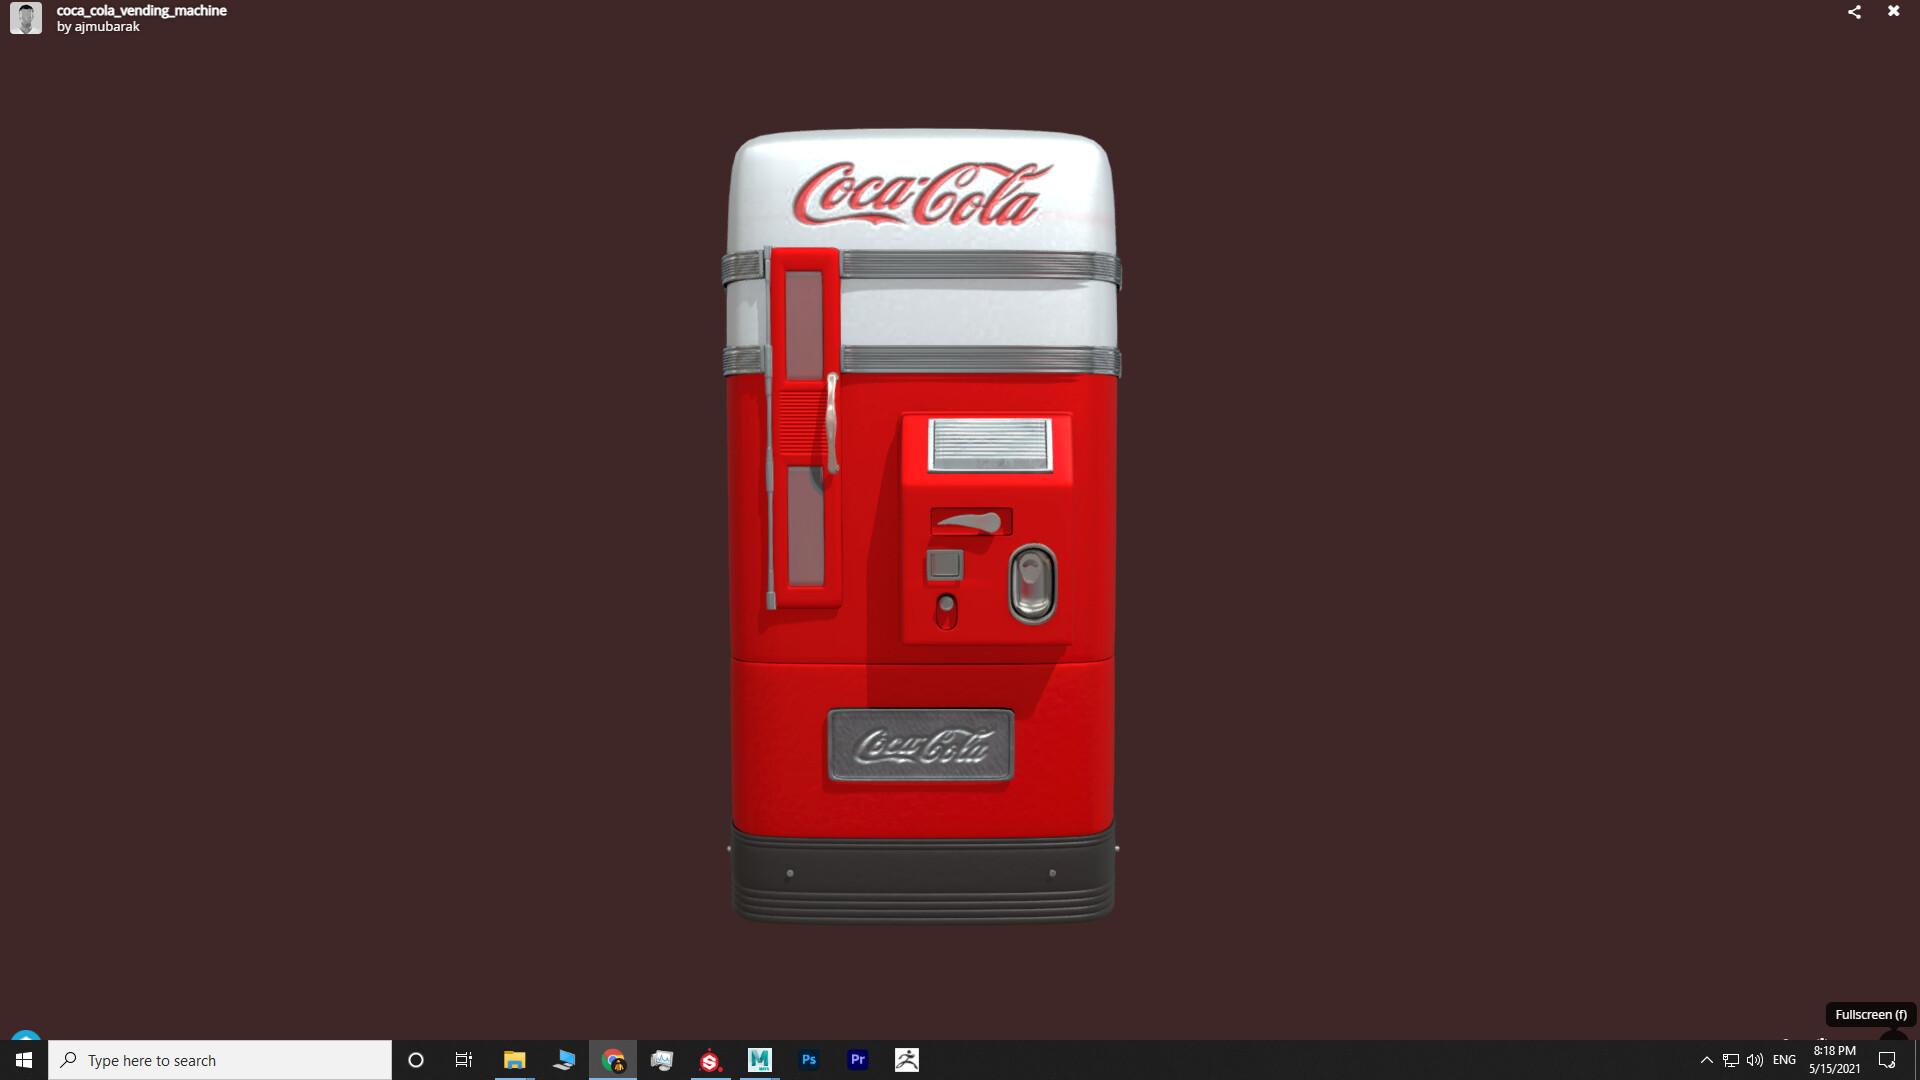 ArtStation - cocacola_vending_machine